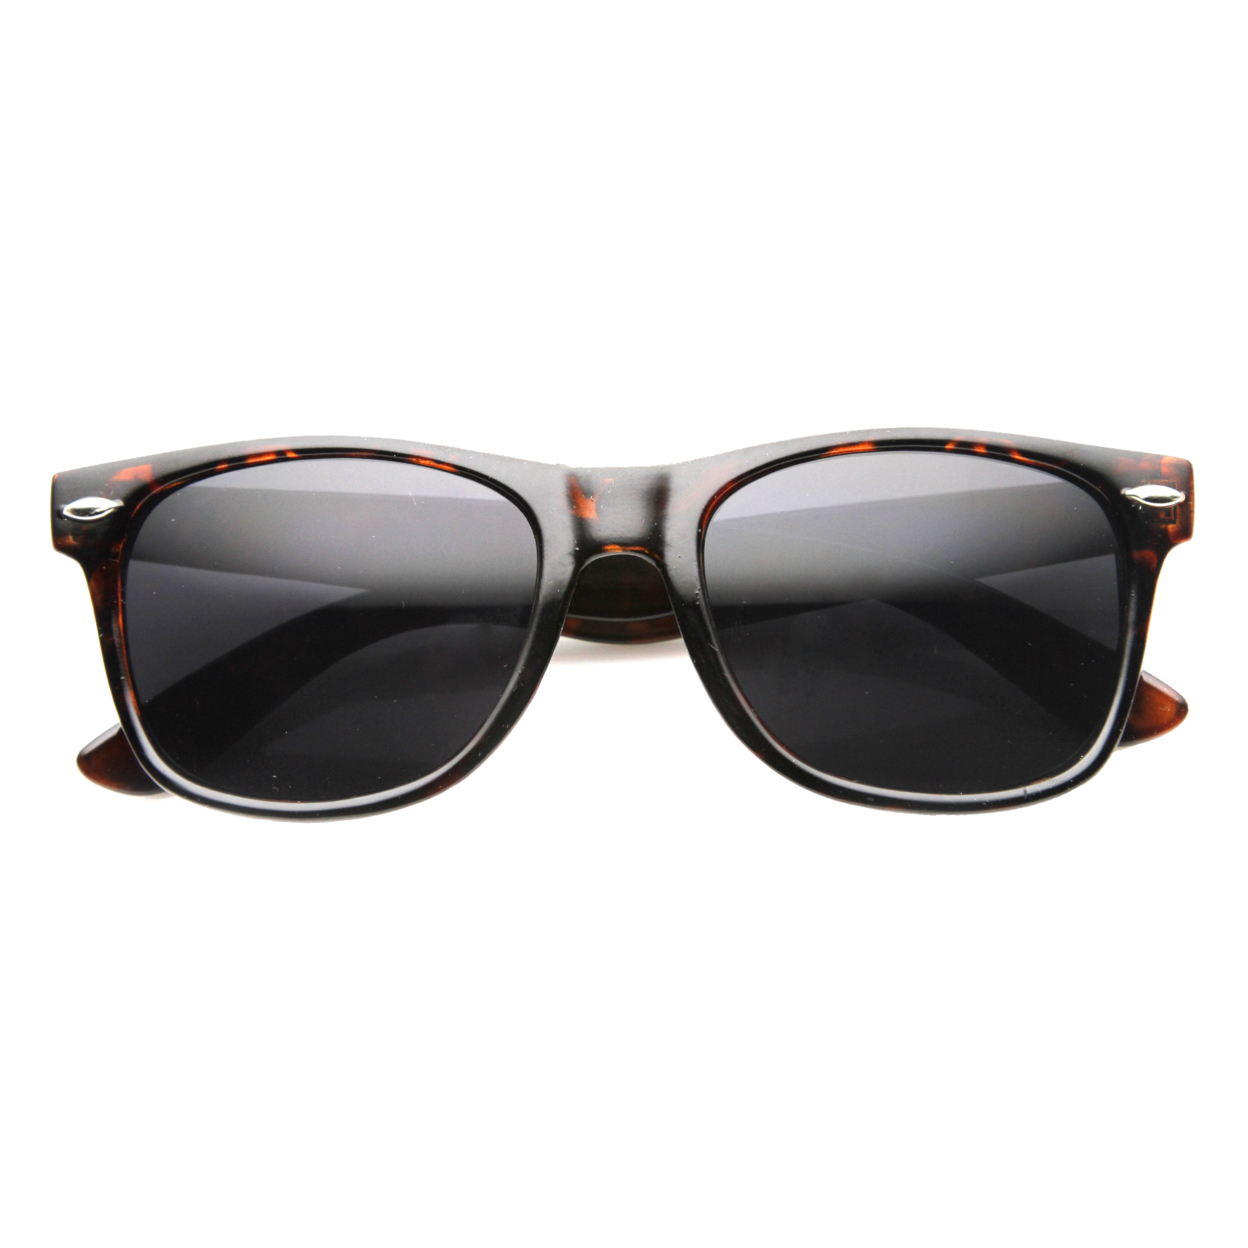 Classic 80s Retro Large Classic Horned Rim Style Sunglasses Eyewear - 8452 - Tortoise / Smoke